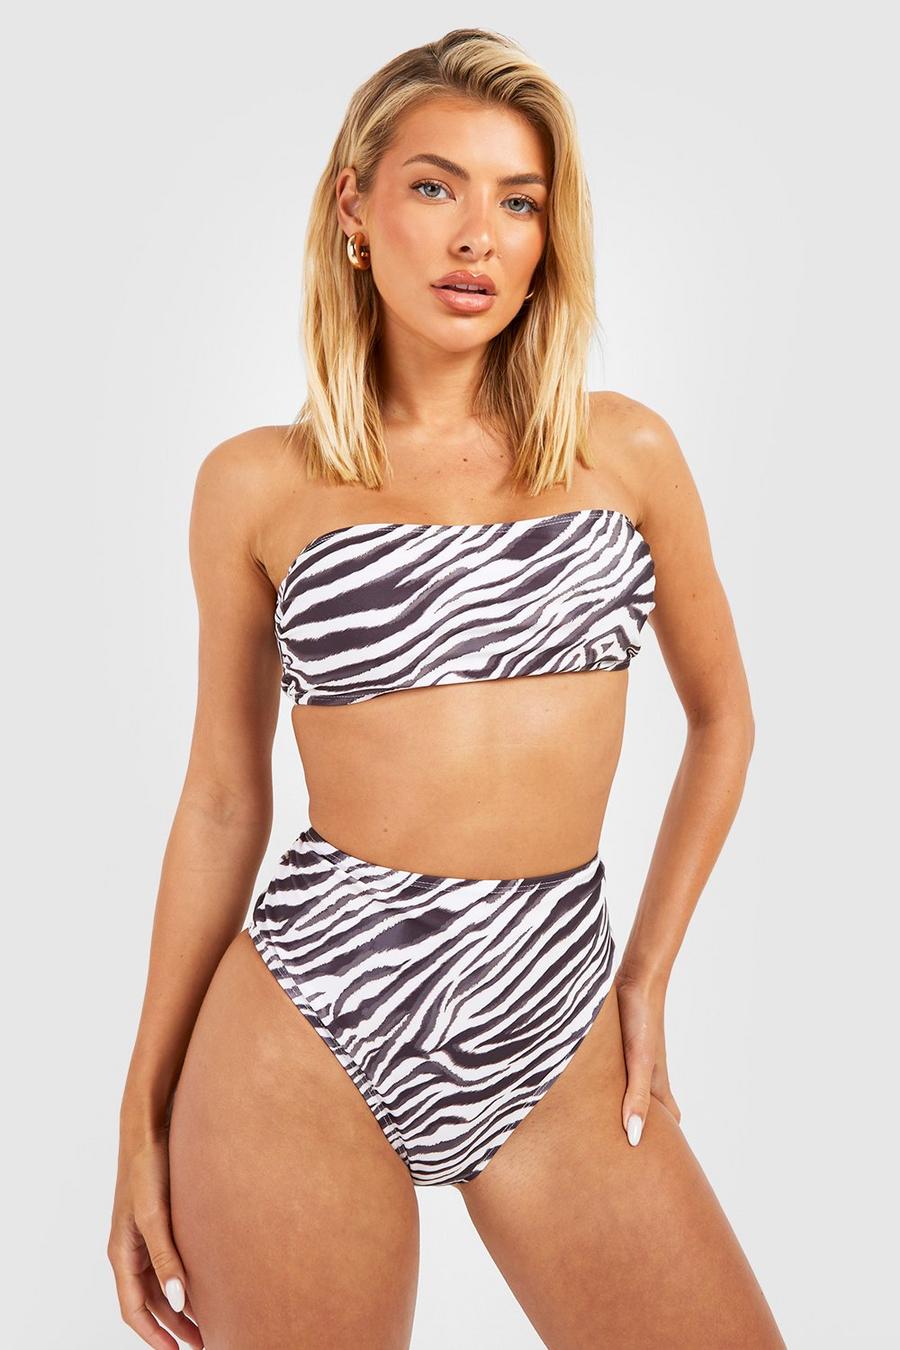 Tigerprint Bandeau-Bikini mit hohem Bund, Cream weiß